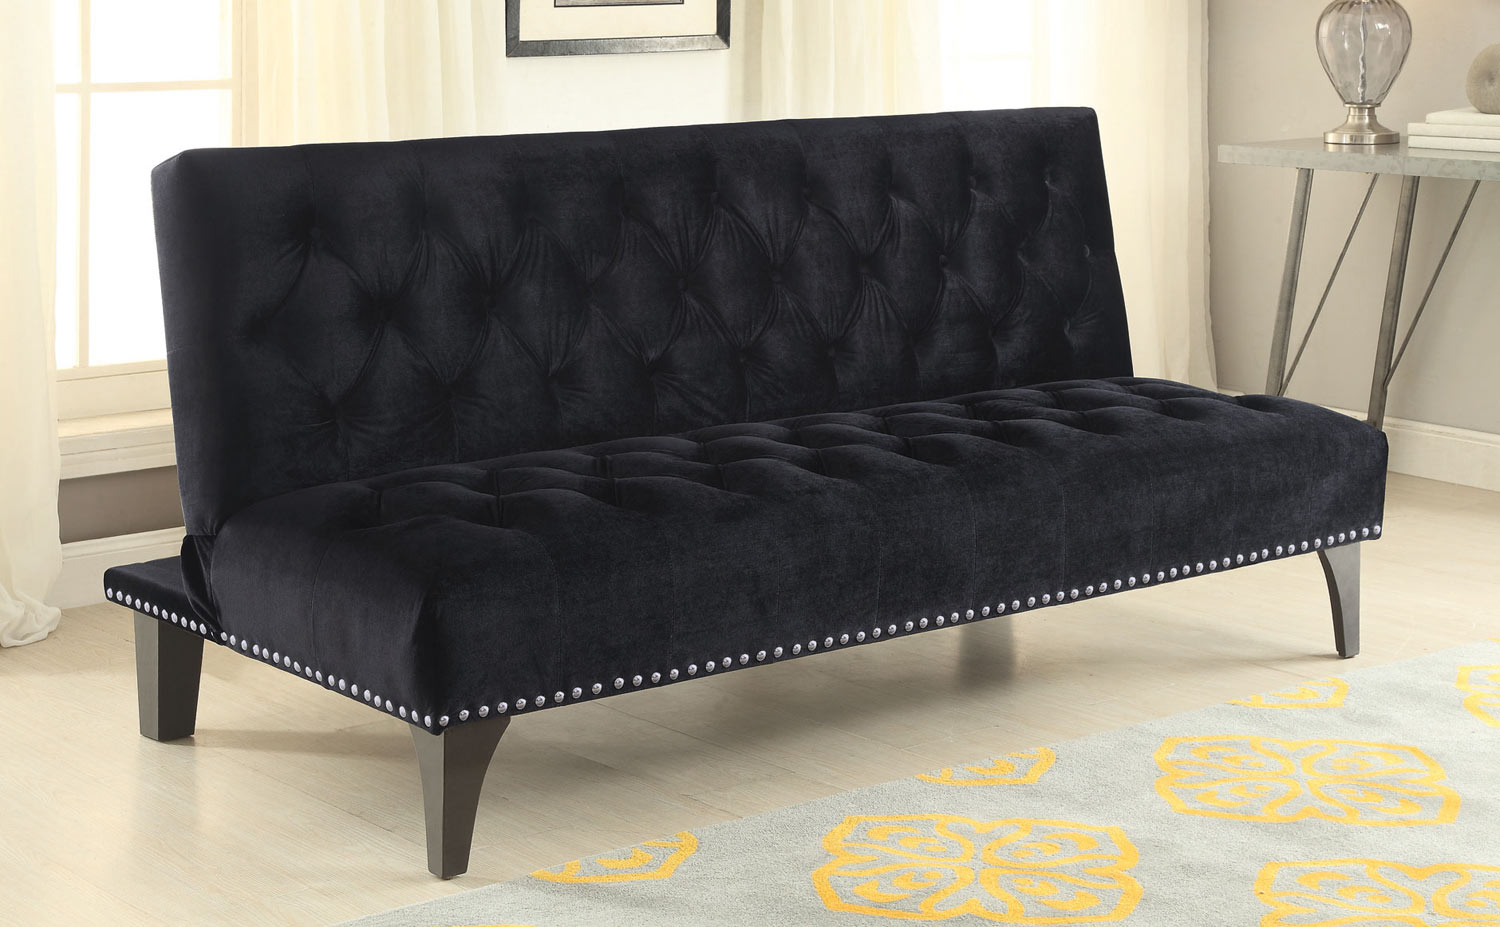 Coaster 500237 Sofa Bed - Black